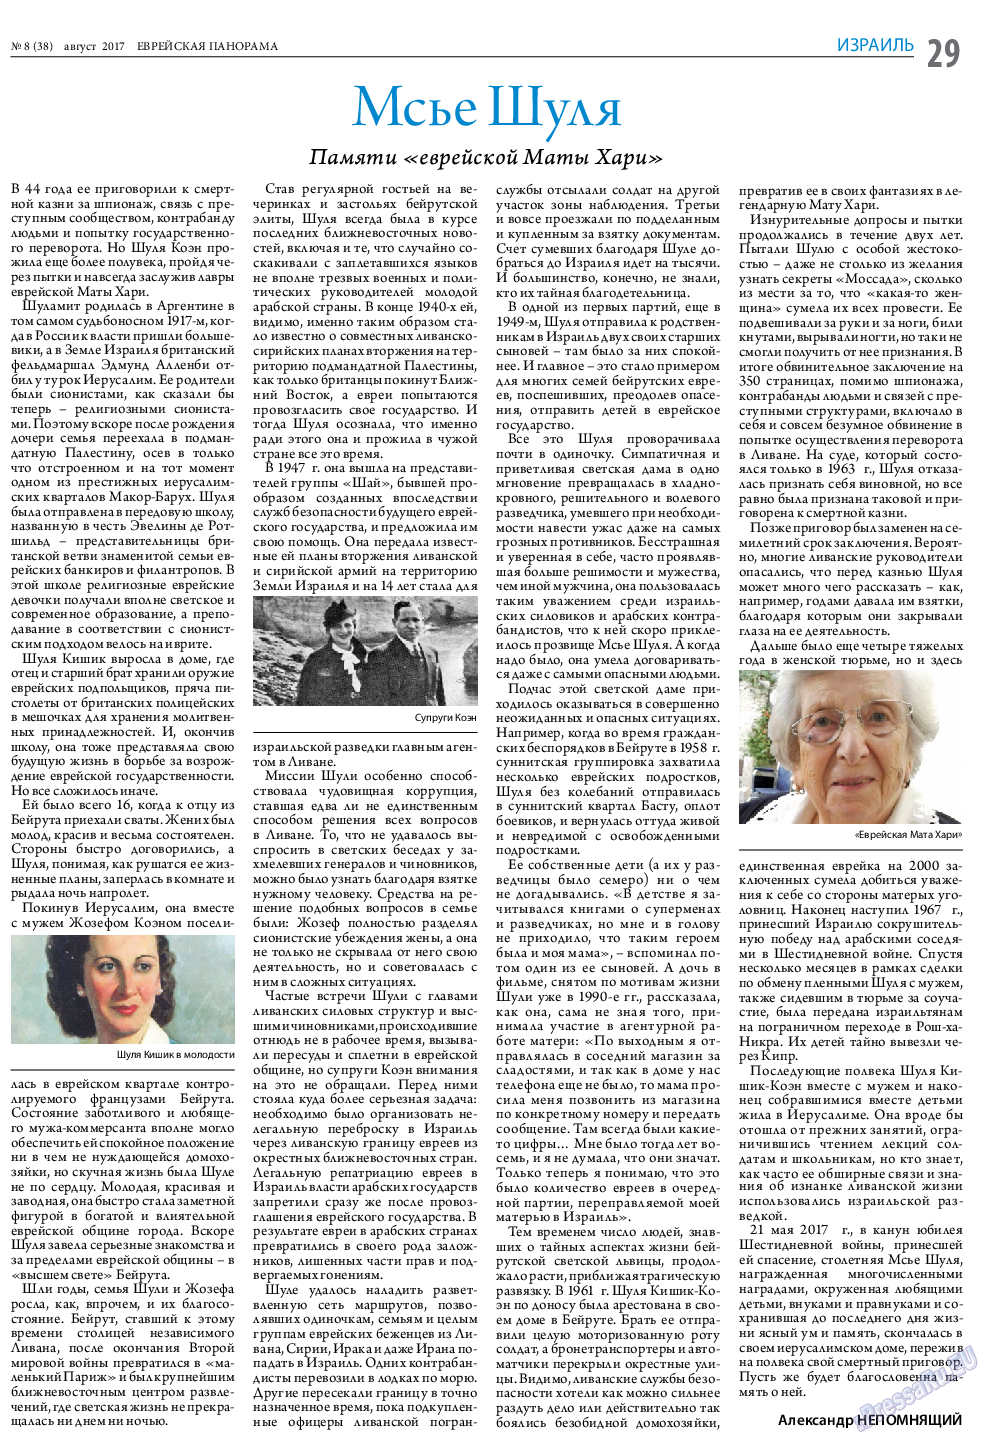 Еврейская панорама, газета. 2017 №8 стр.29